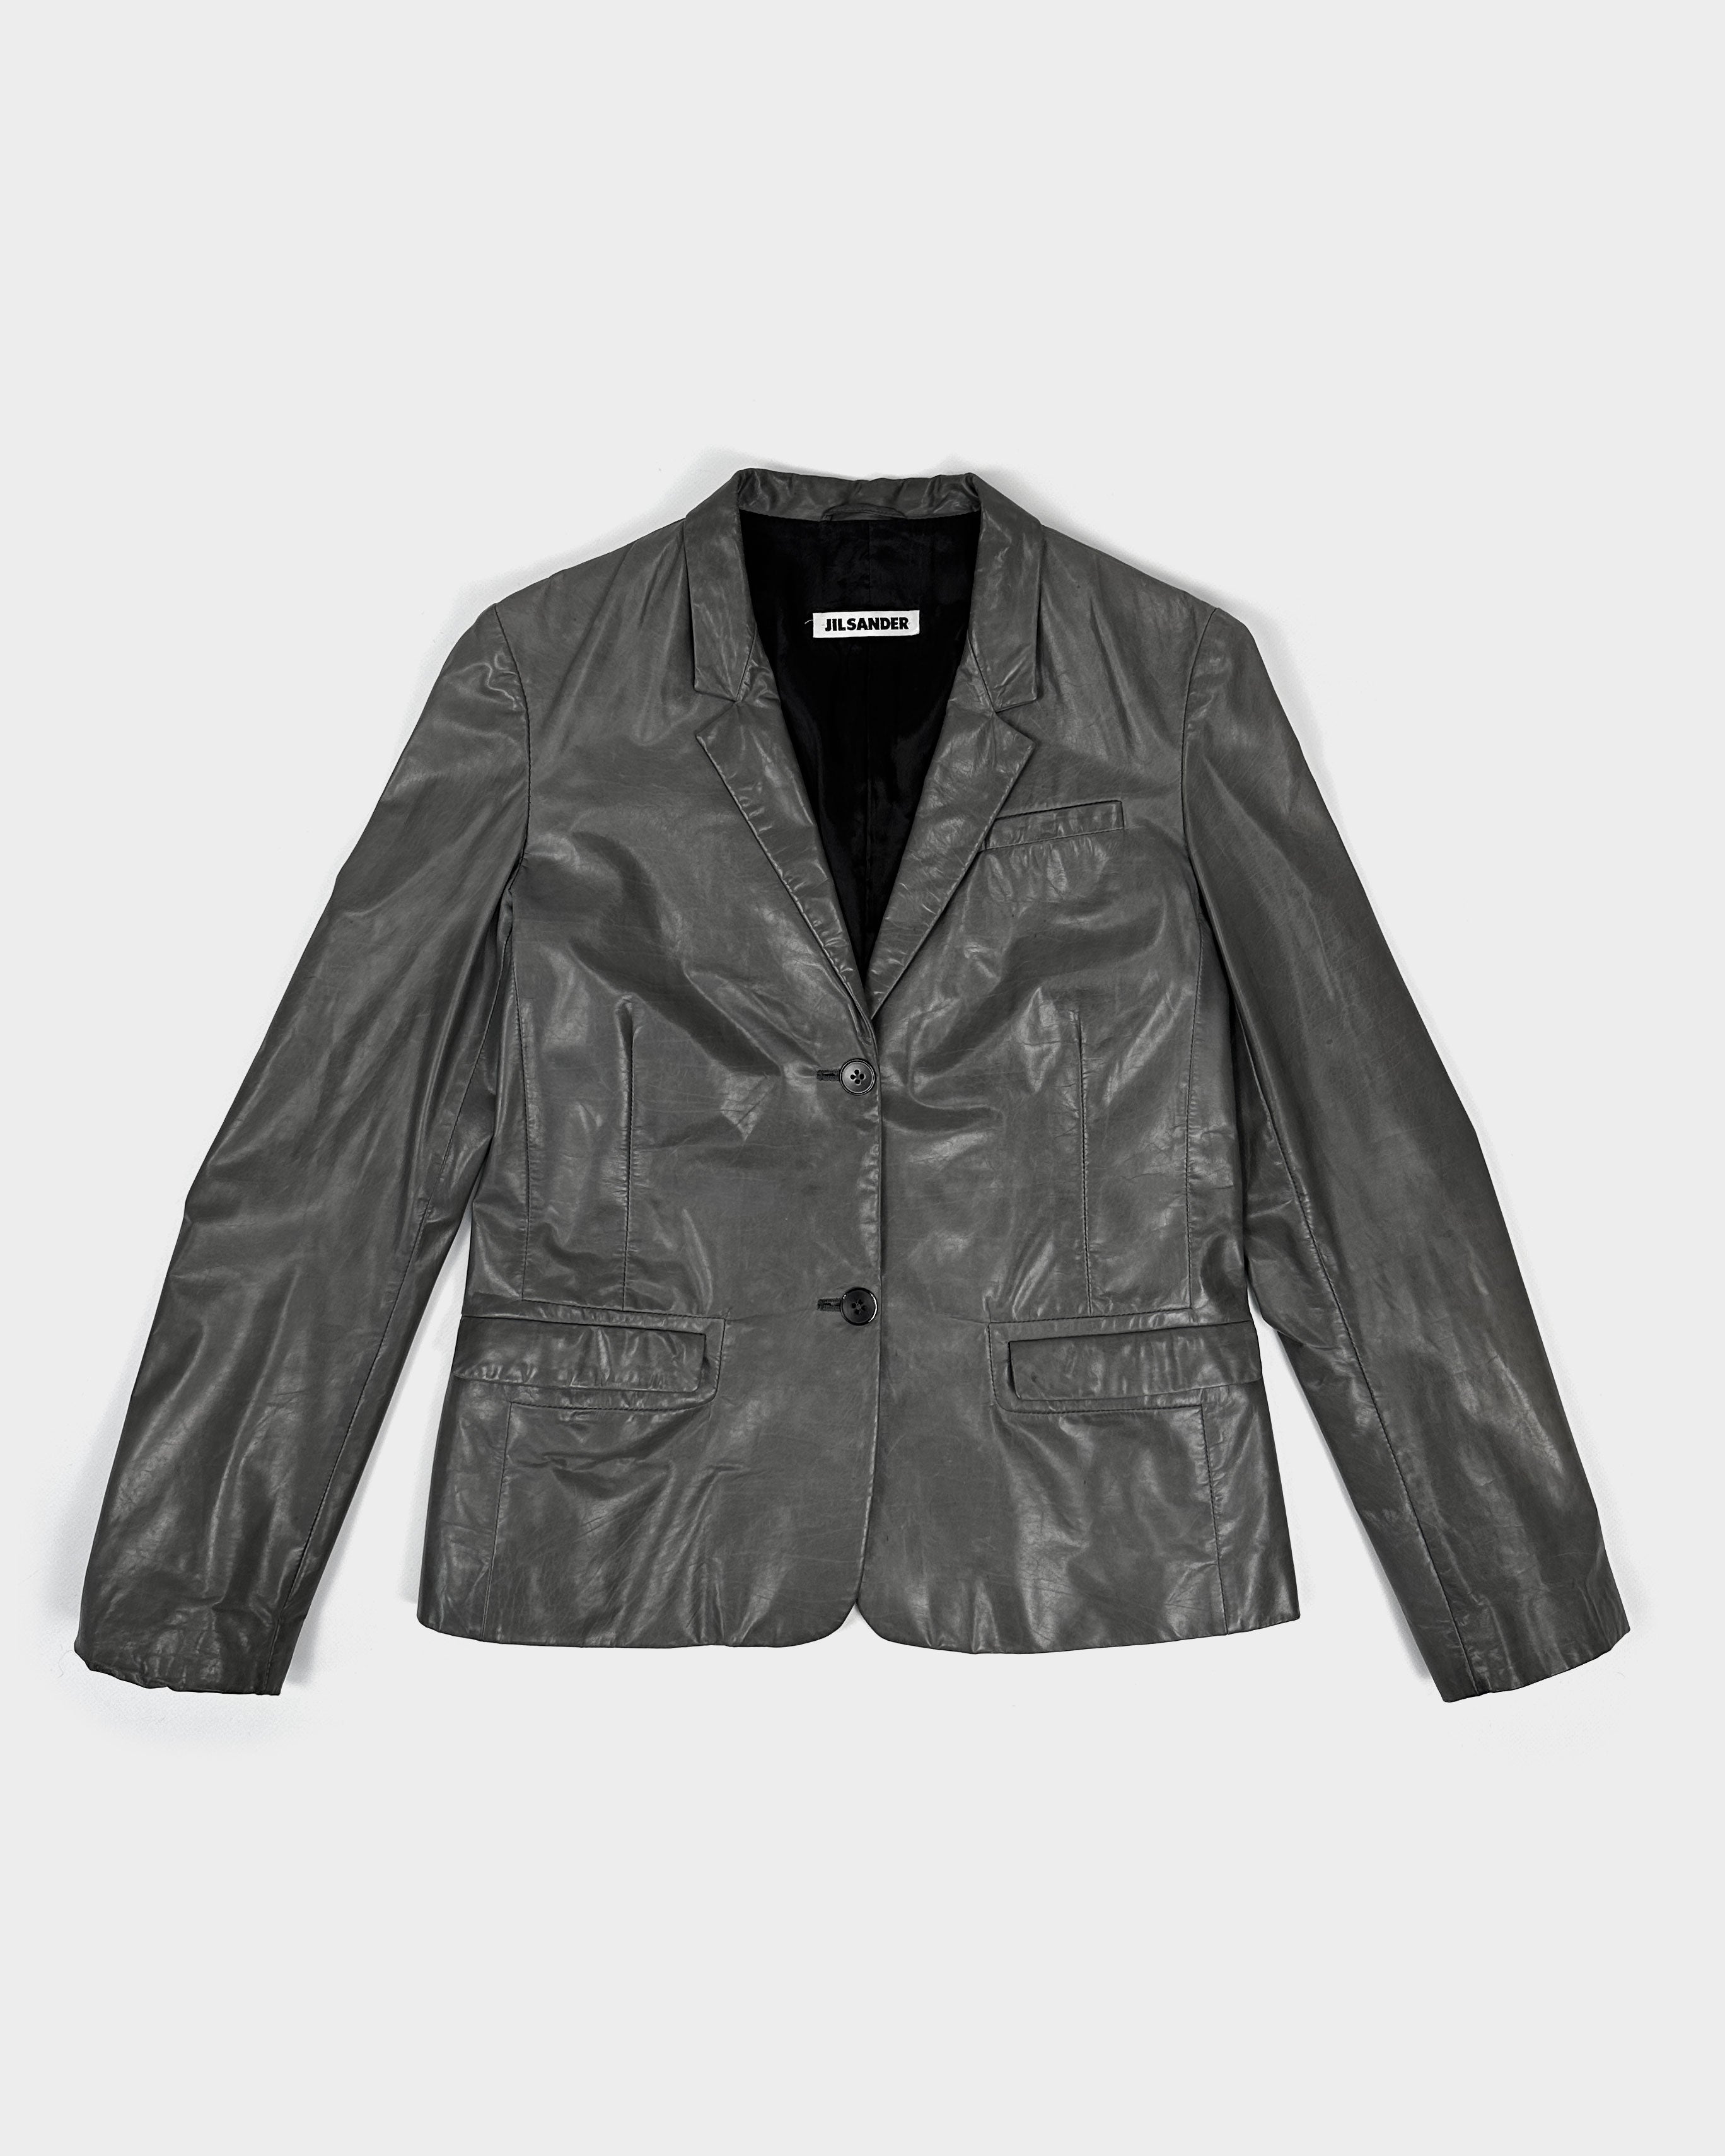 Jil Sander By Raf Simons Leather Jacket SS 2012 – Vintage TTS